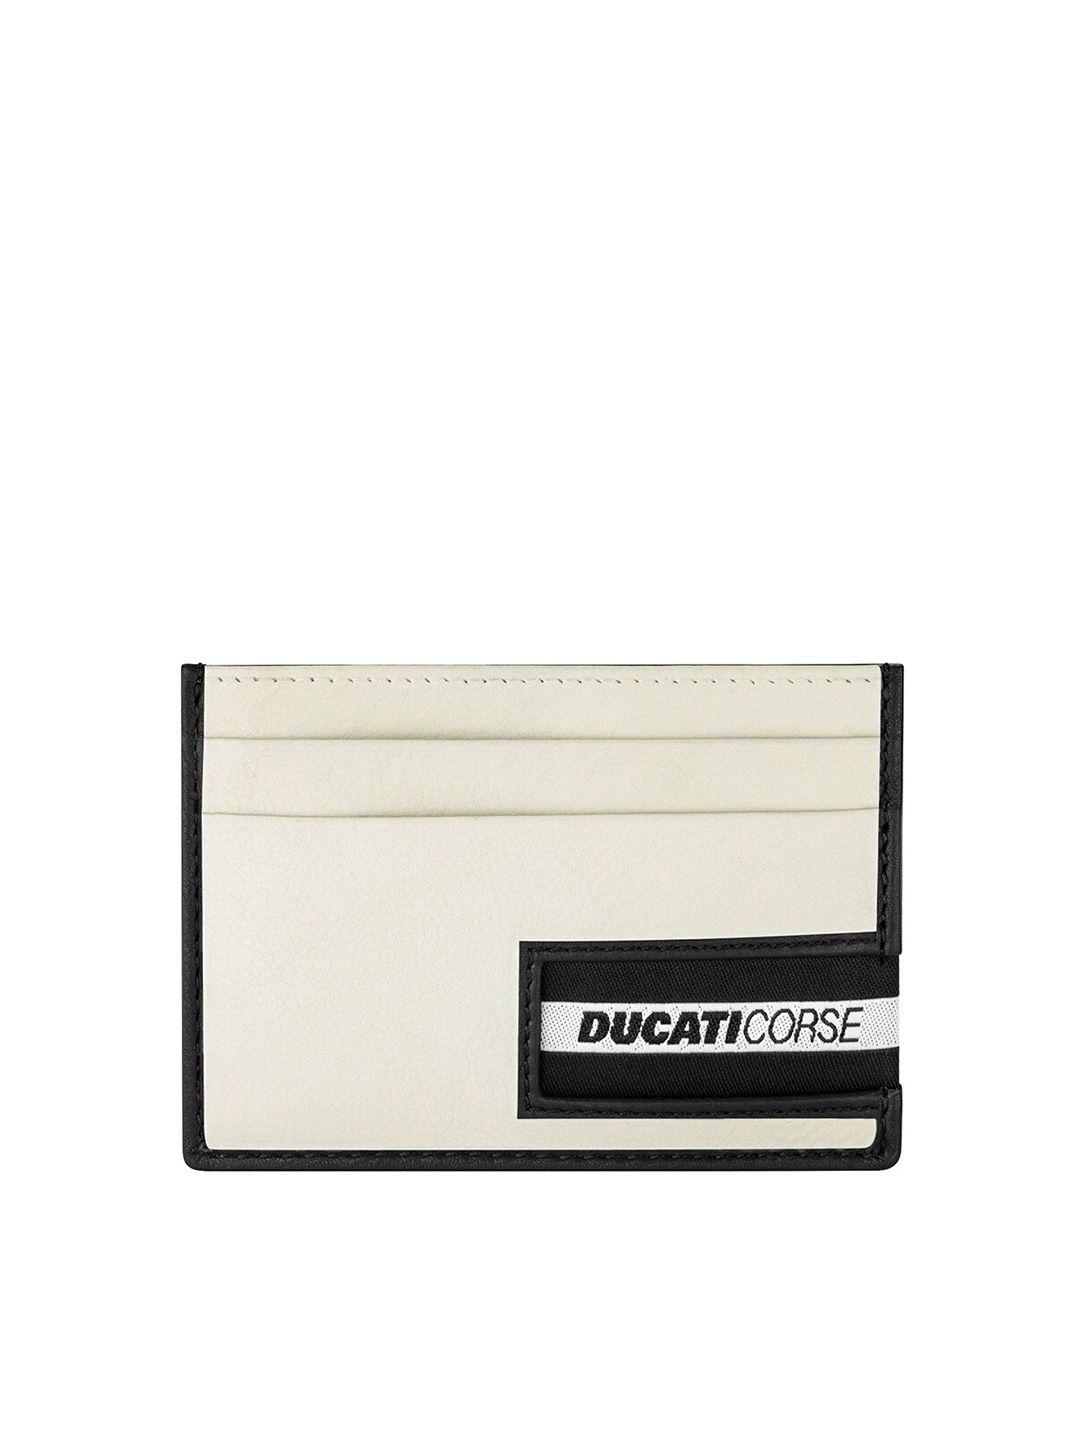 ducati corse men white & black textured leather card holder